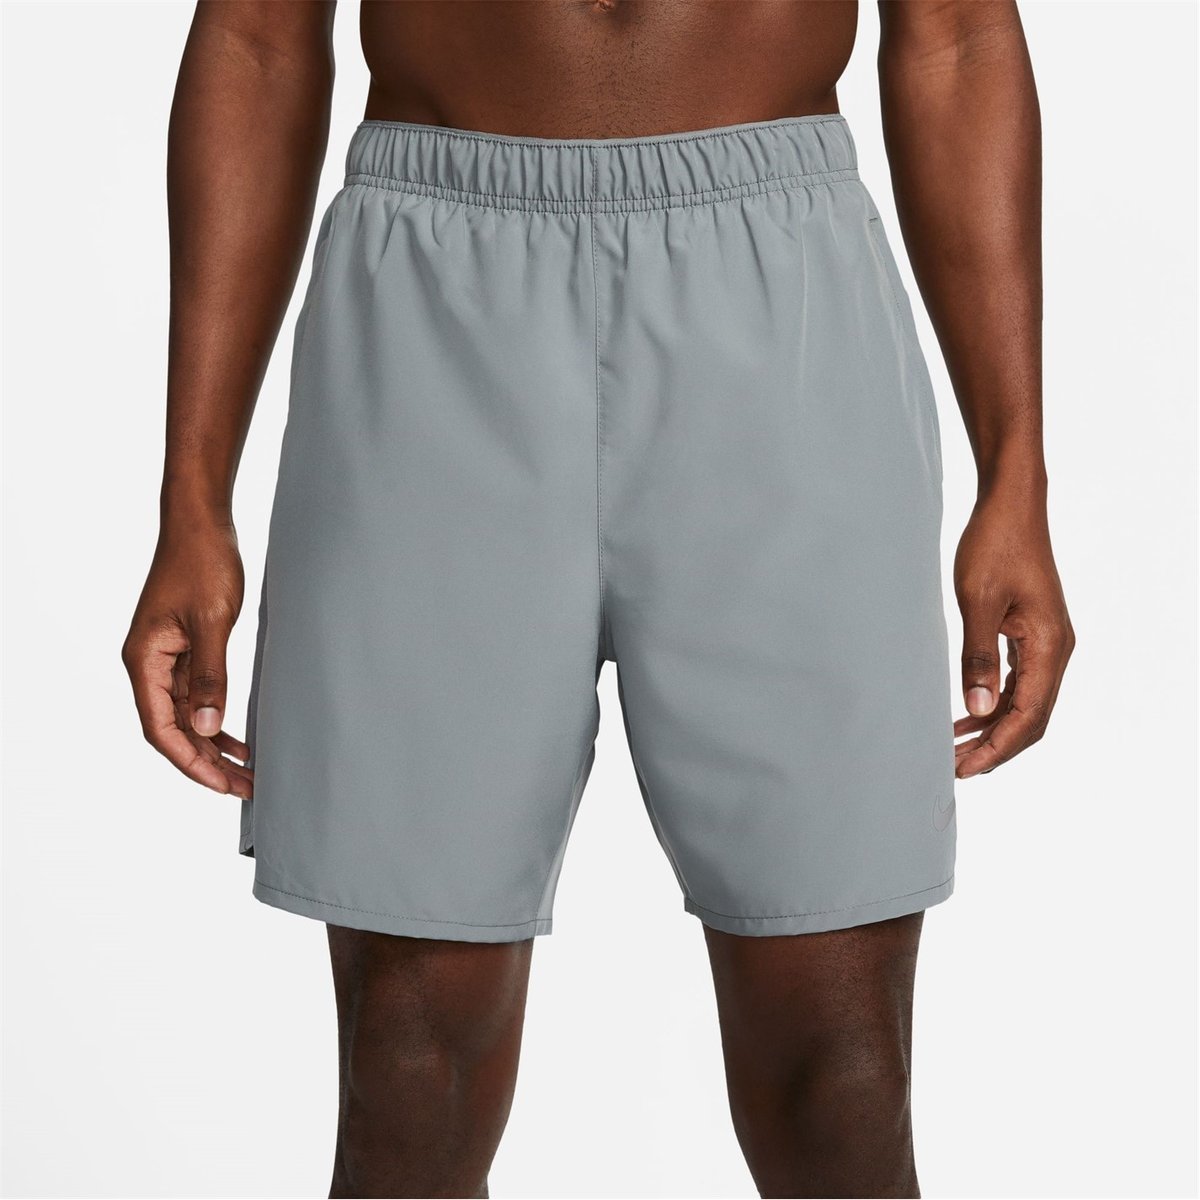 Mens Running Clothing Shorts